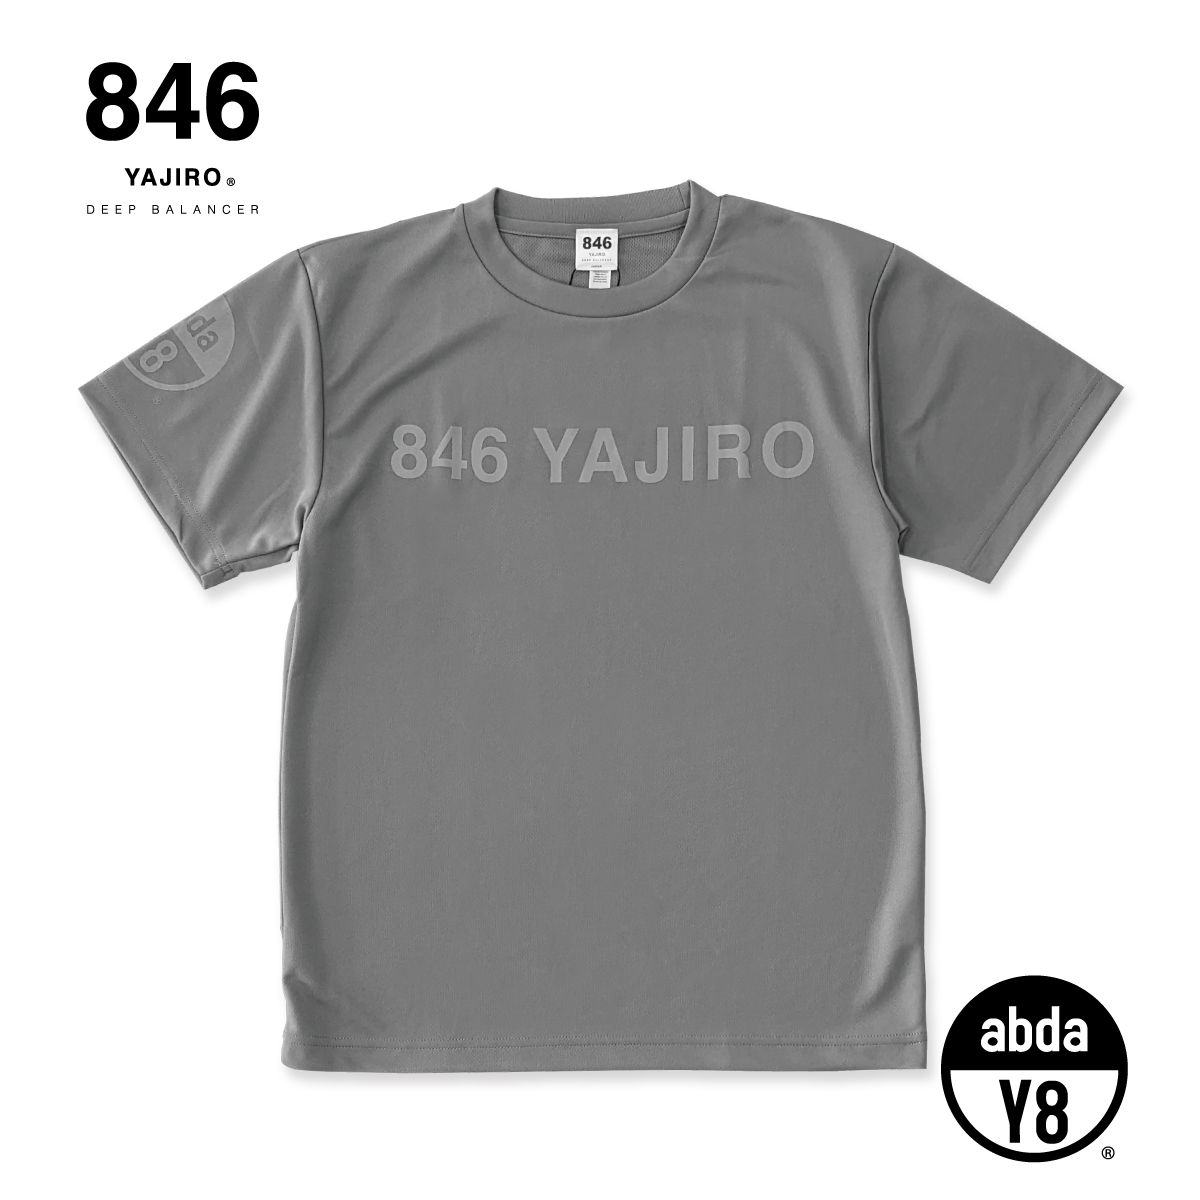 846YAJIROオンラインショップ / TOPページ